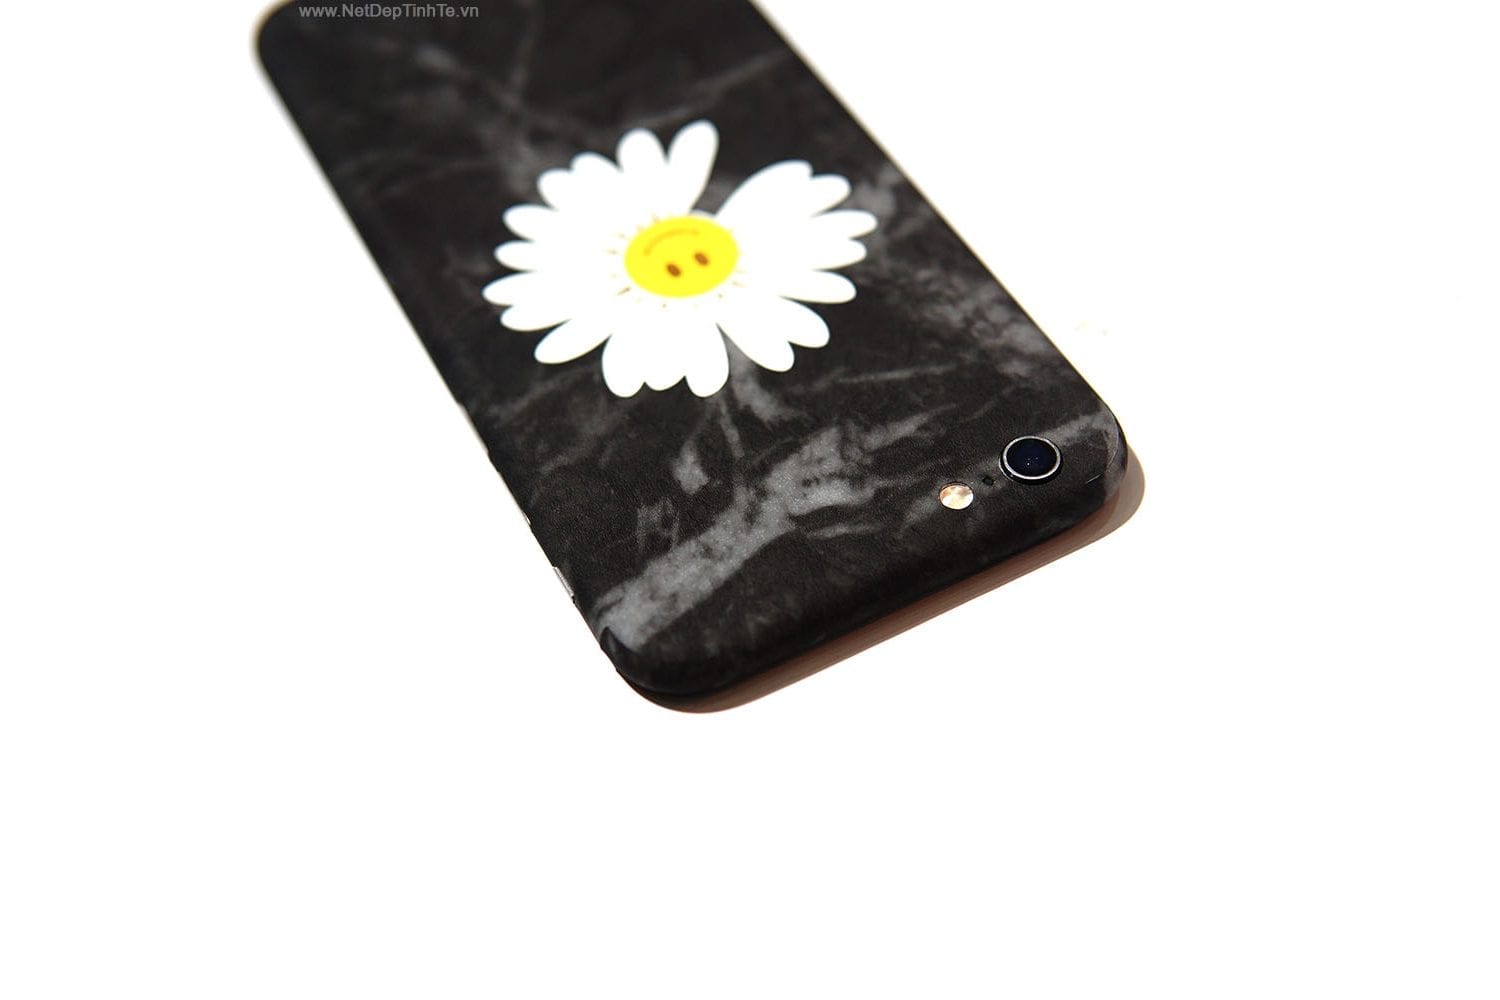 Skin film 3M điện thoại Iphone 6s